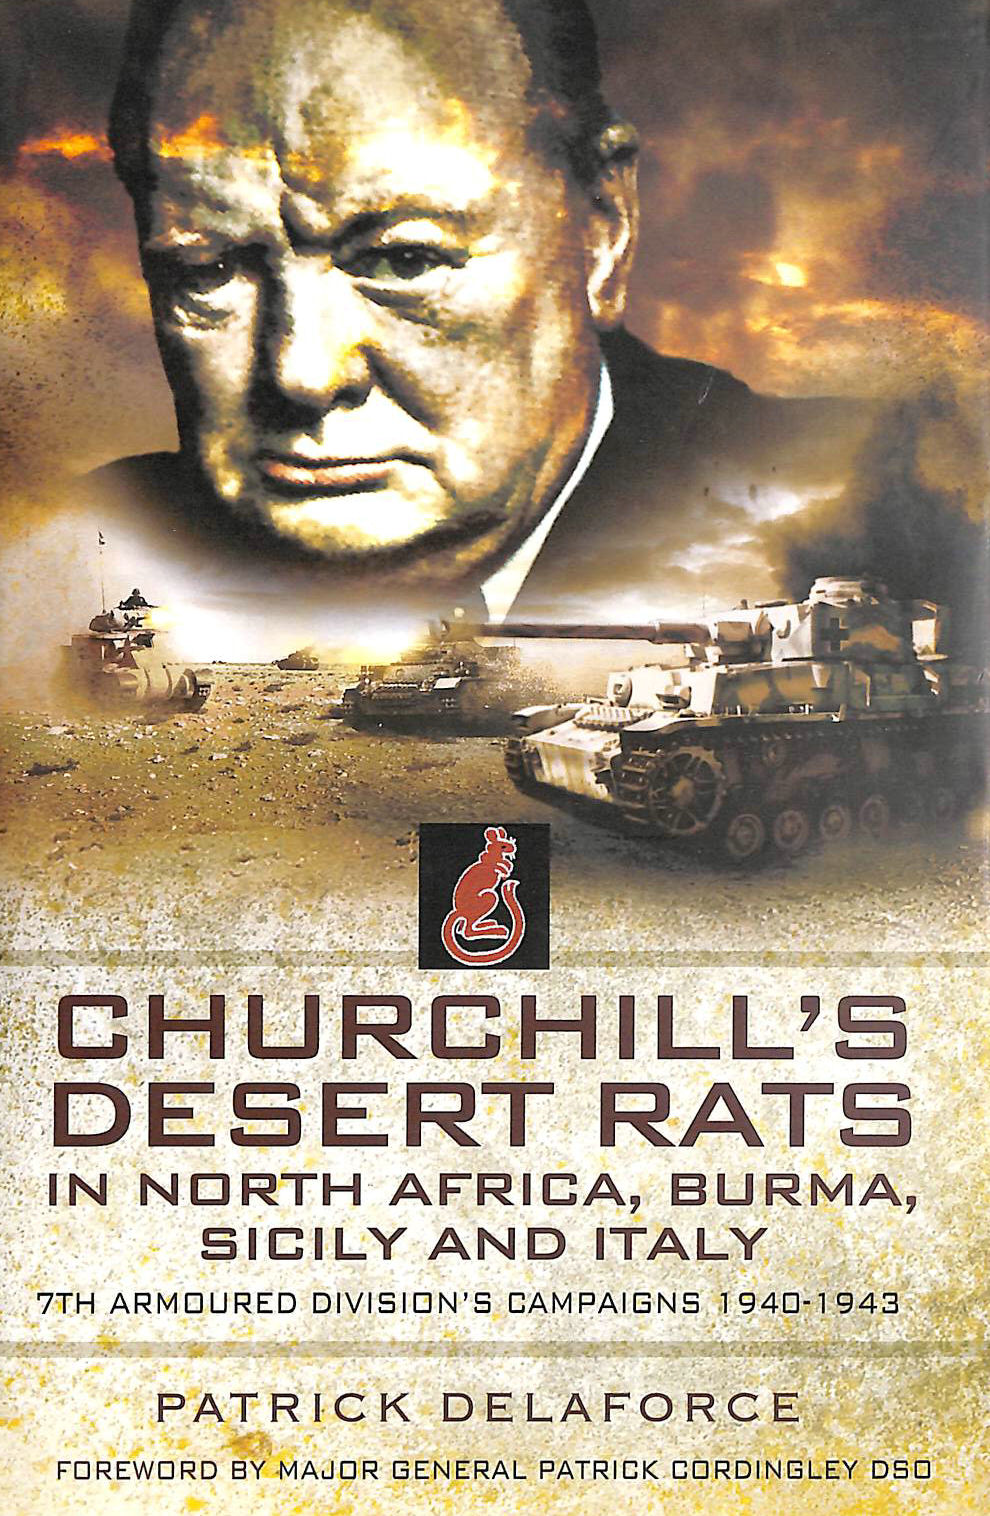 DELAFORCE, PATRICK; CORDINGL, PATRICK MAJOR GENERAL - Churchill's Desert Rats in North Africa and Italy